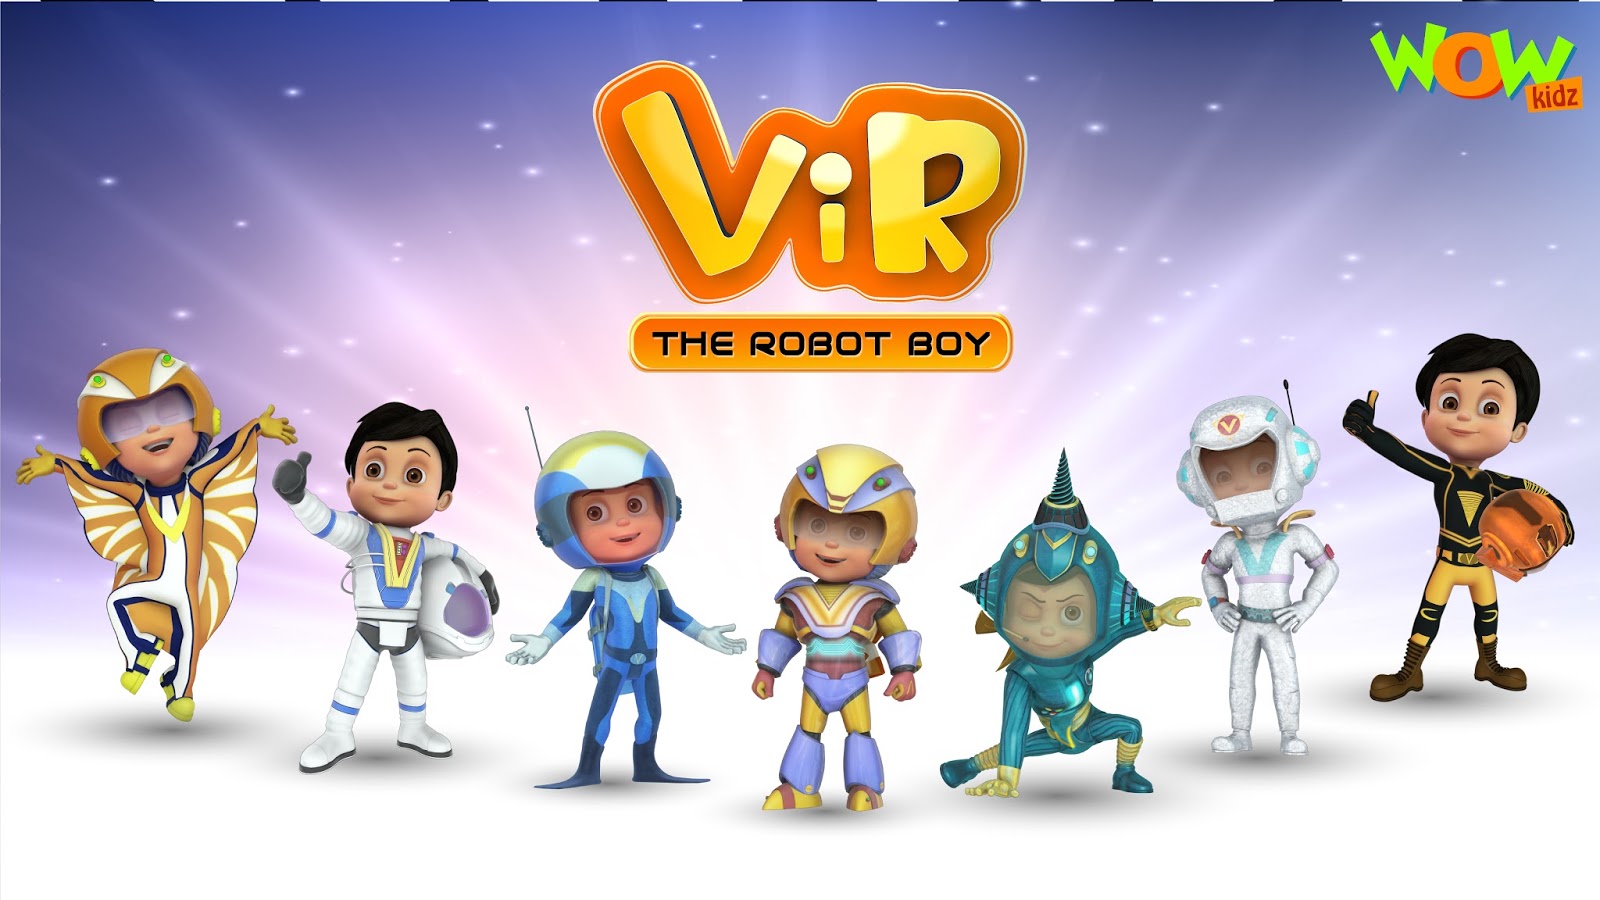 Wow Kidz: Vir: The Robot Boy: A Robot with human emotions.